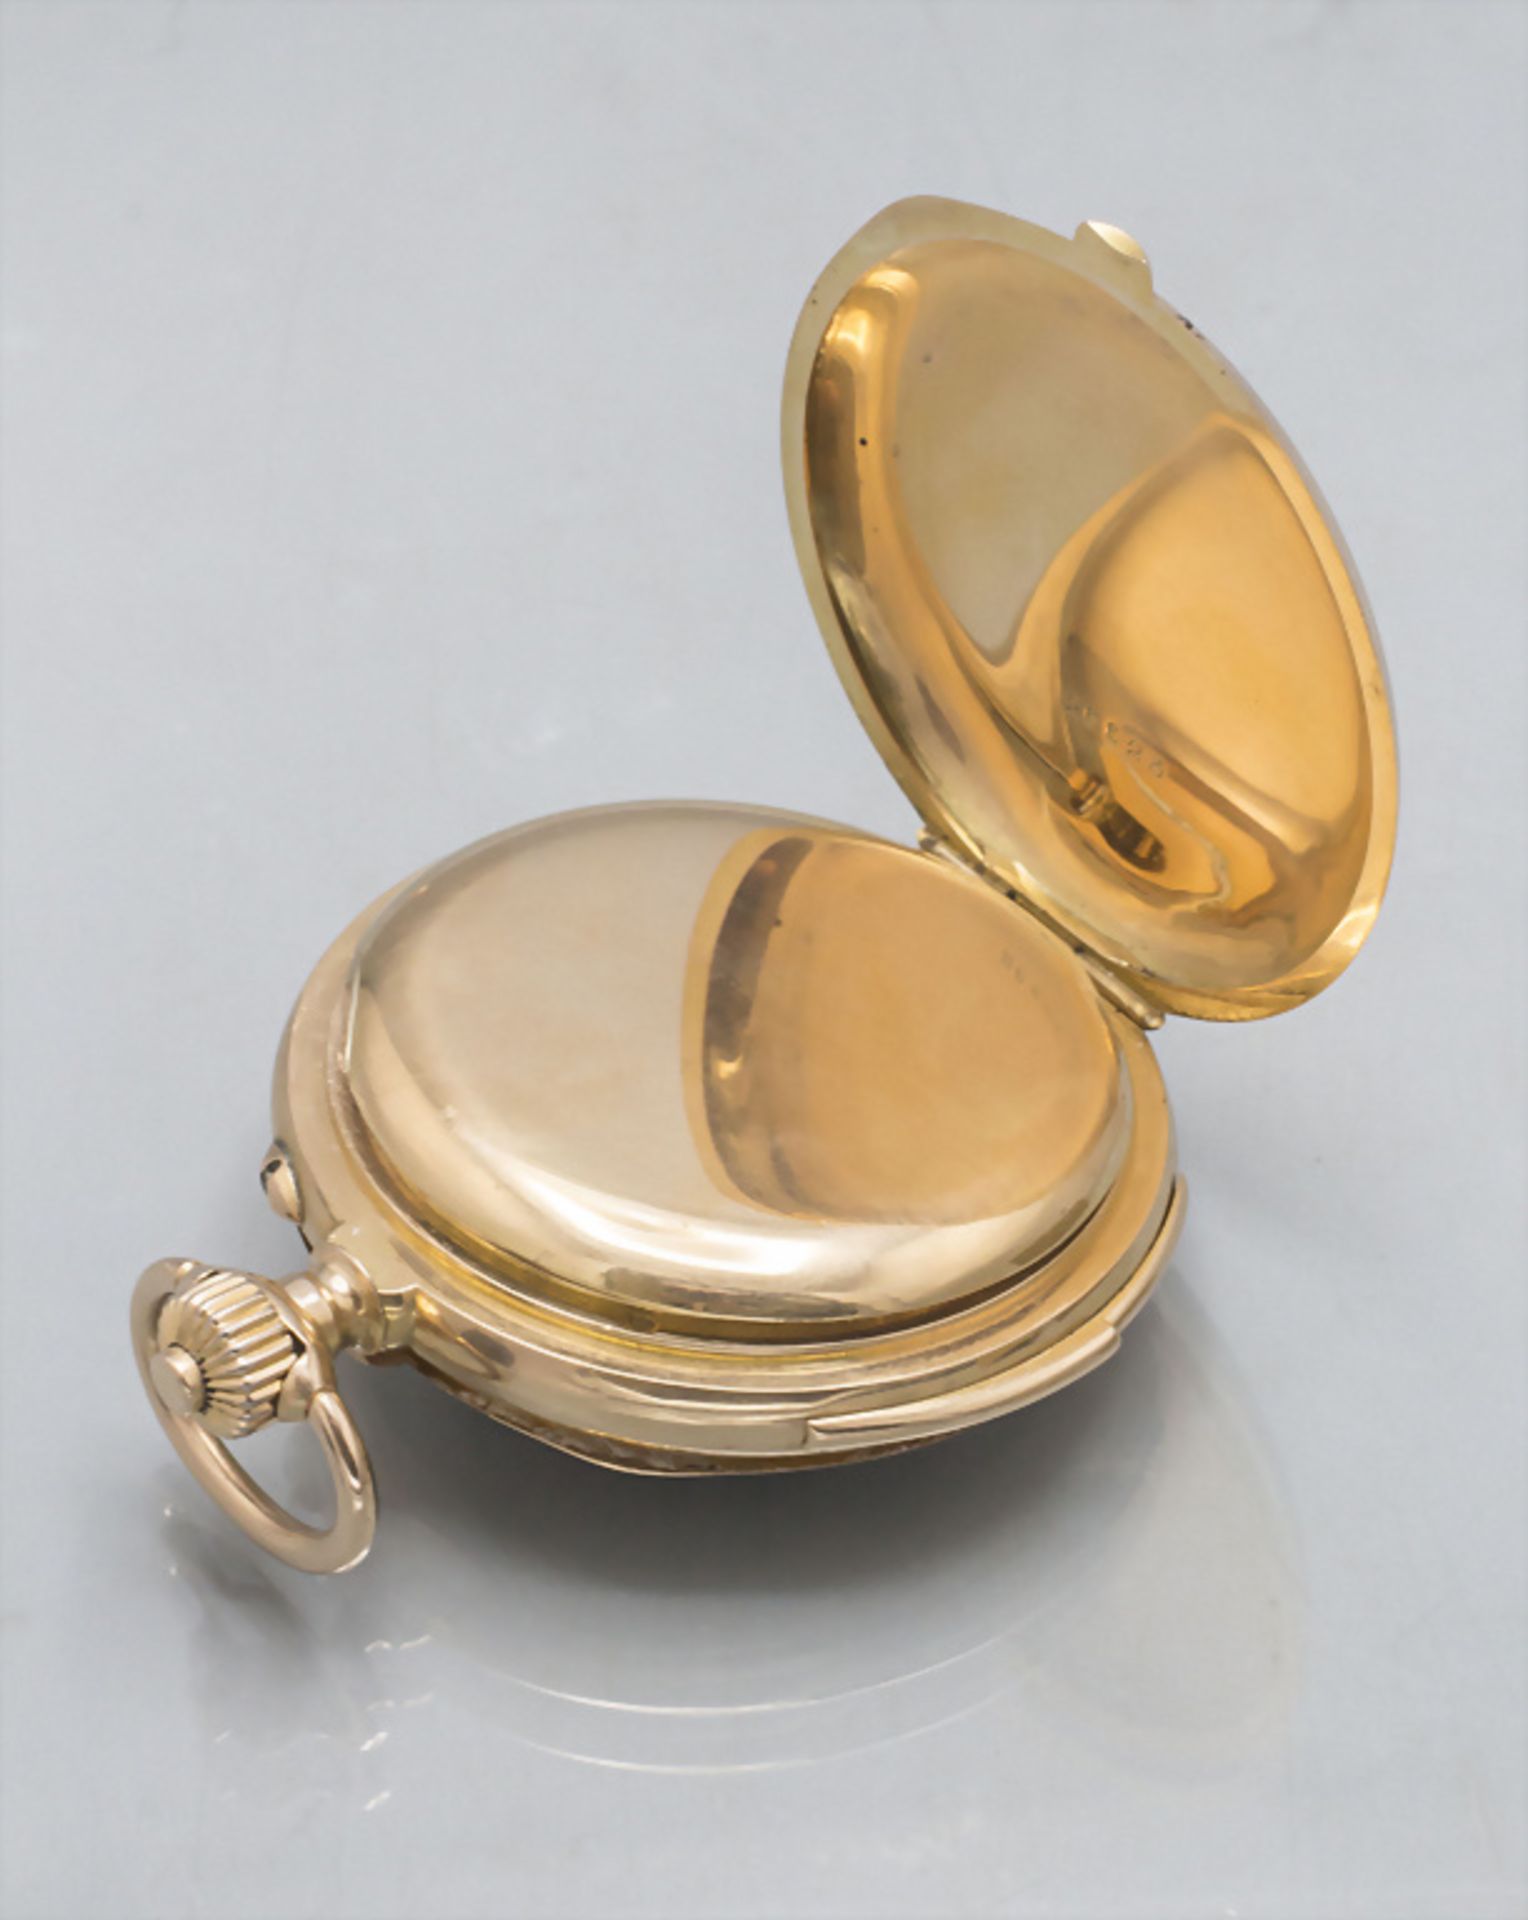 Offene Taschenuhr Minutenrepetition / A 18 ct gold open faced watch, Schweiz/Swiss, um 1910 - Image 5 of 5